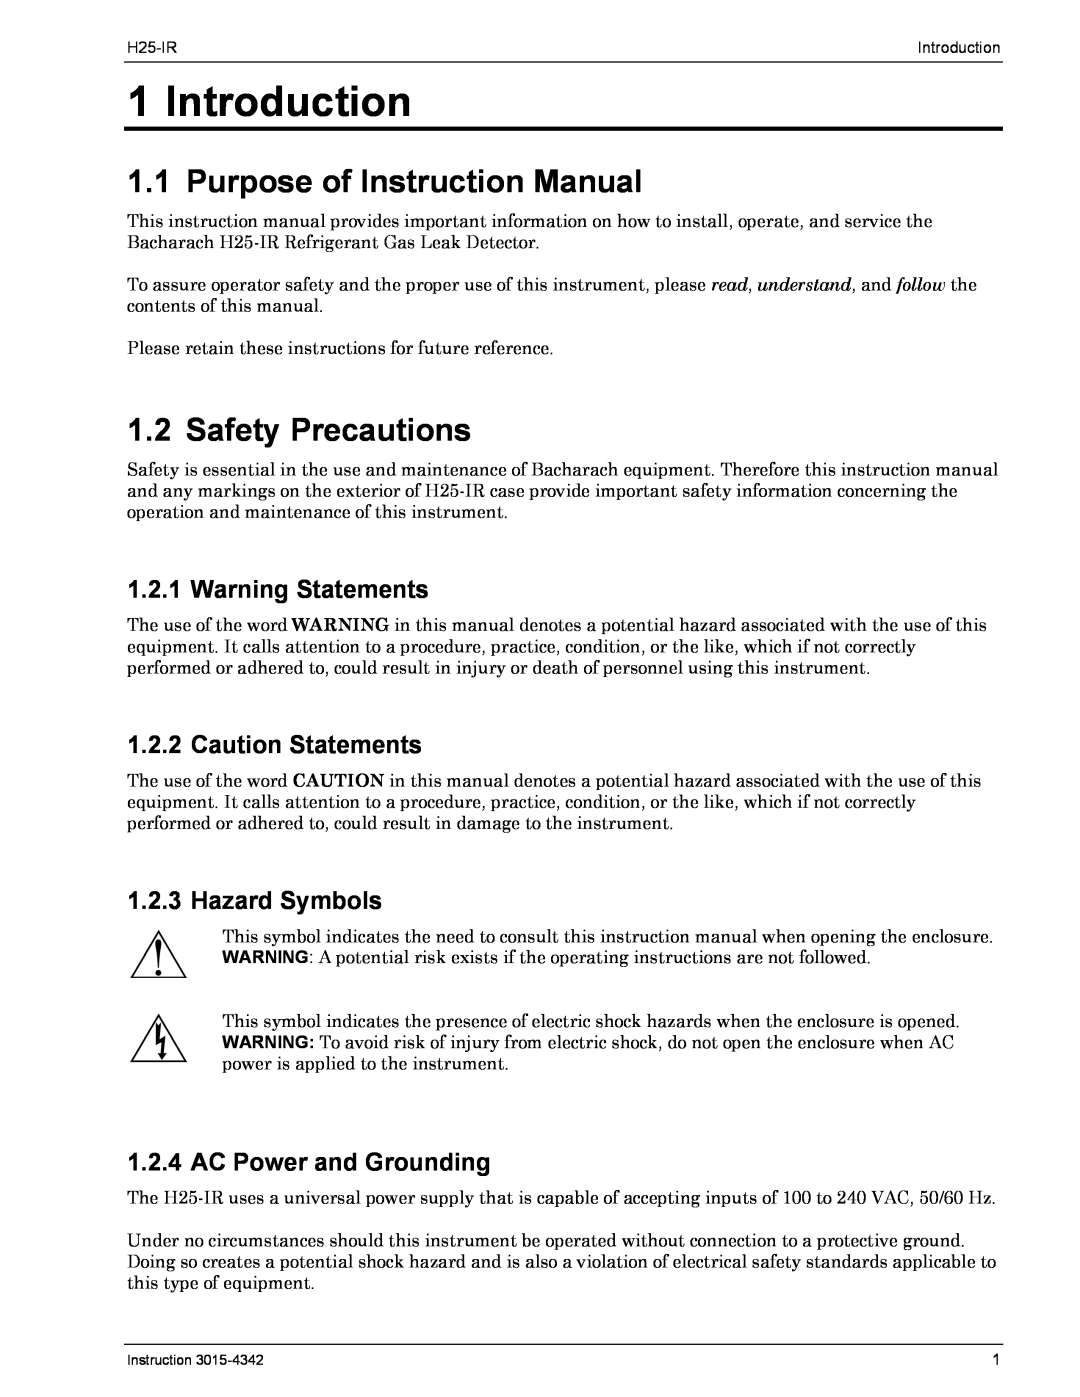 Bacharach H25-IR manual Introduction, Safety Precautions, Warning Statements, Caution Statements, Hazard Symbols 